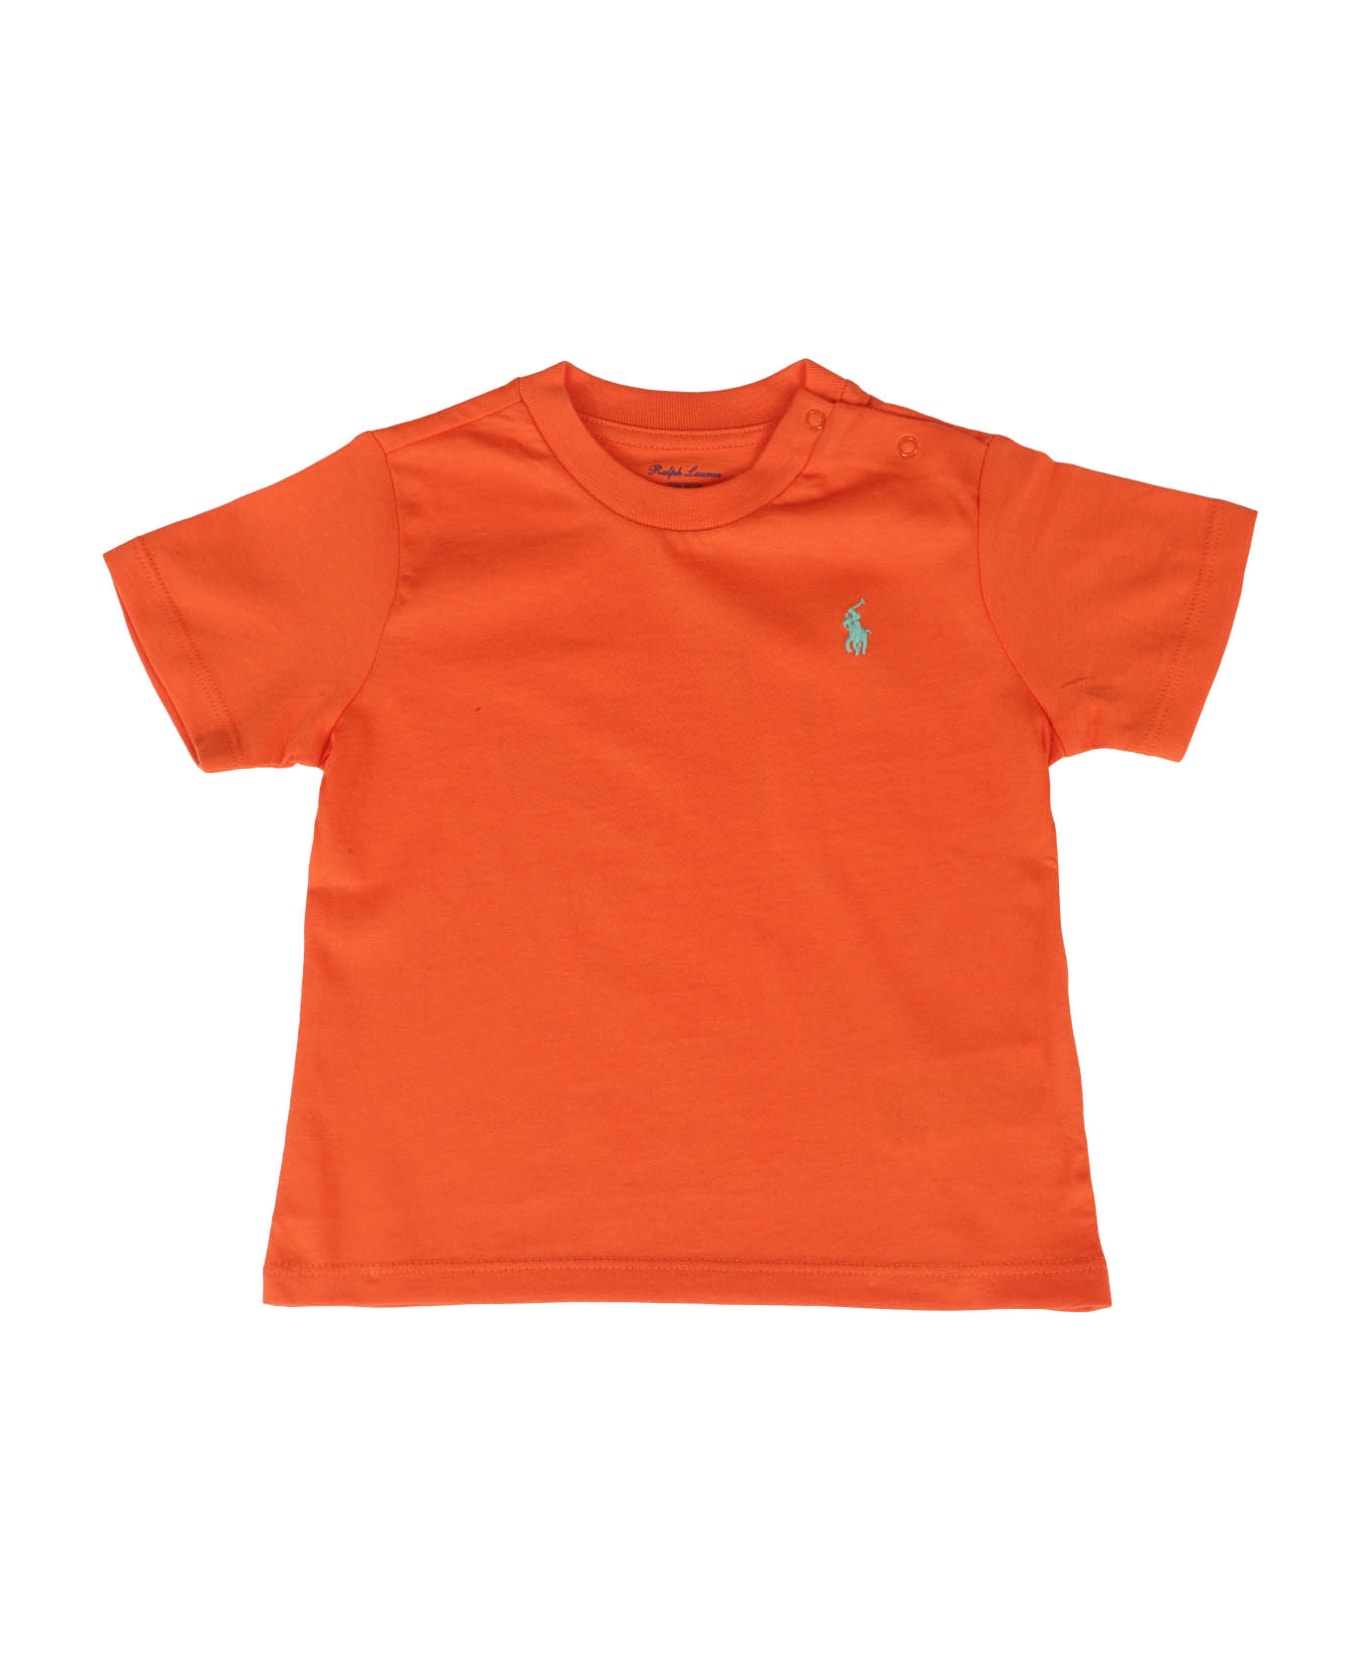 Polo Ralph Lauren Tshirt - Orange